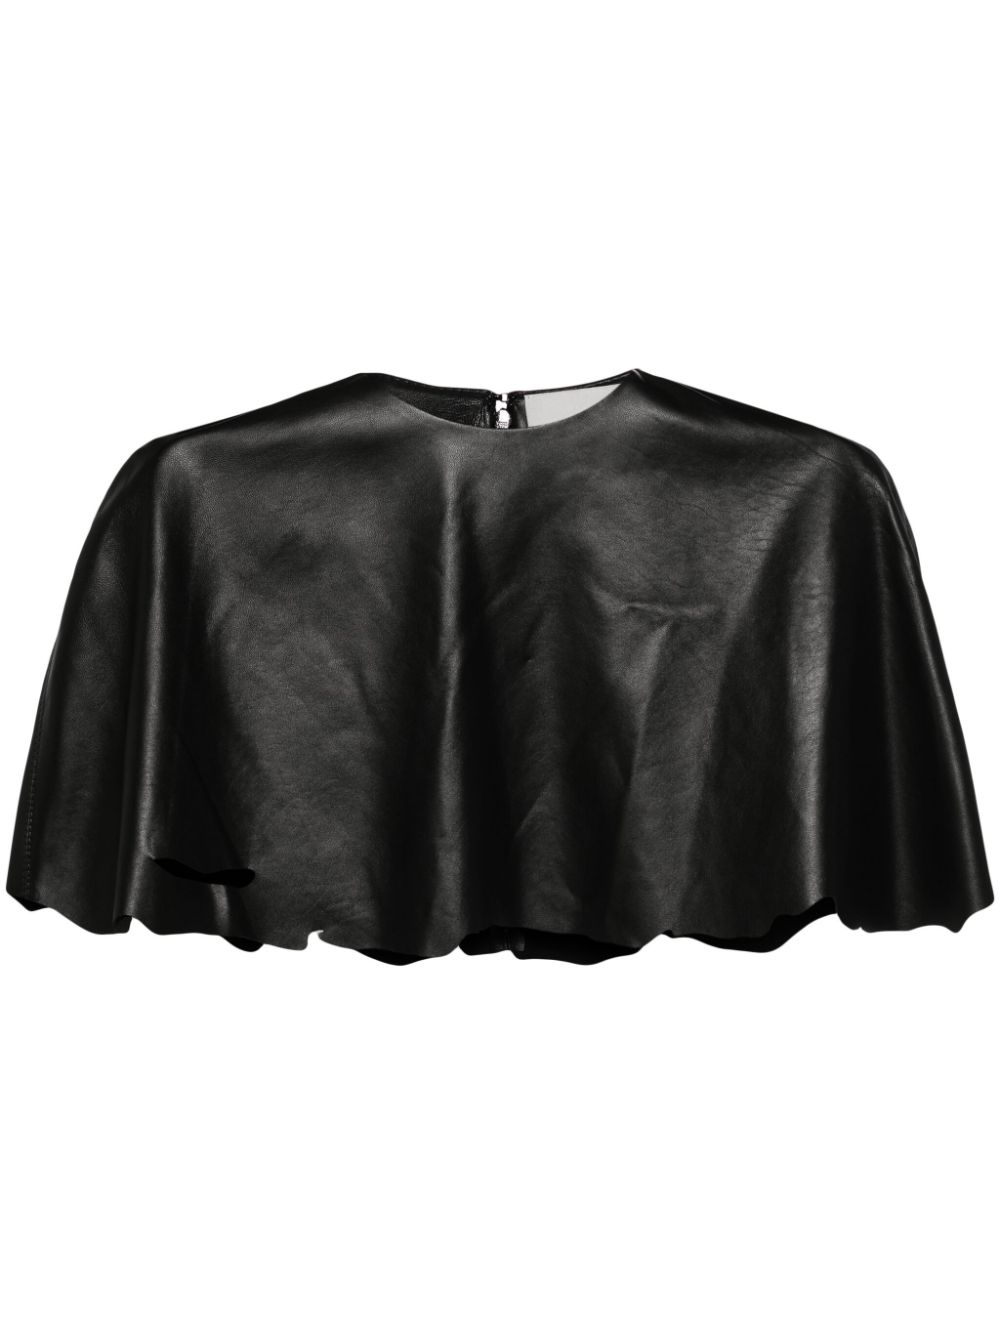 Coperni asymmetric leather cropped top - Black von Coperni